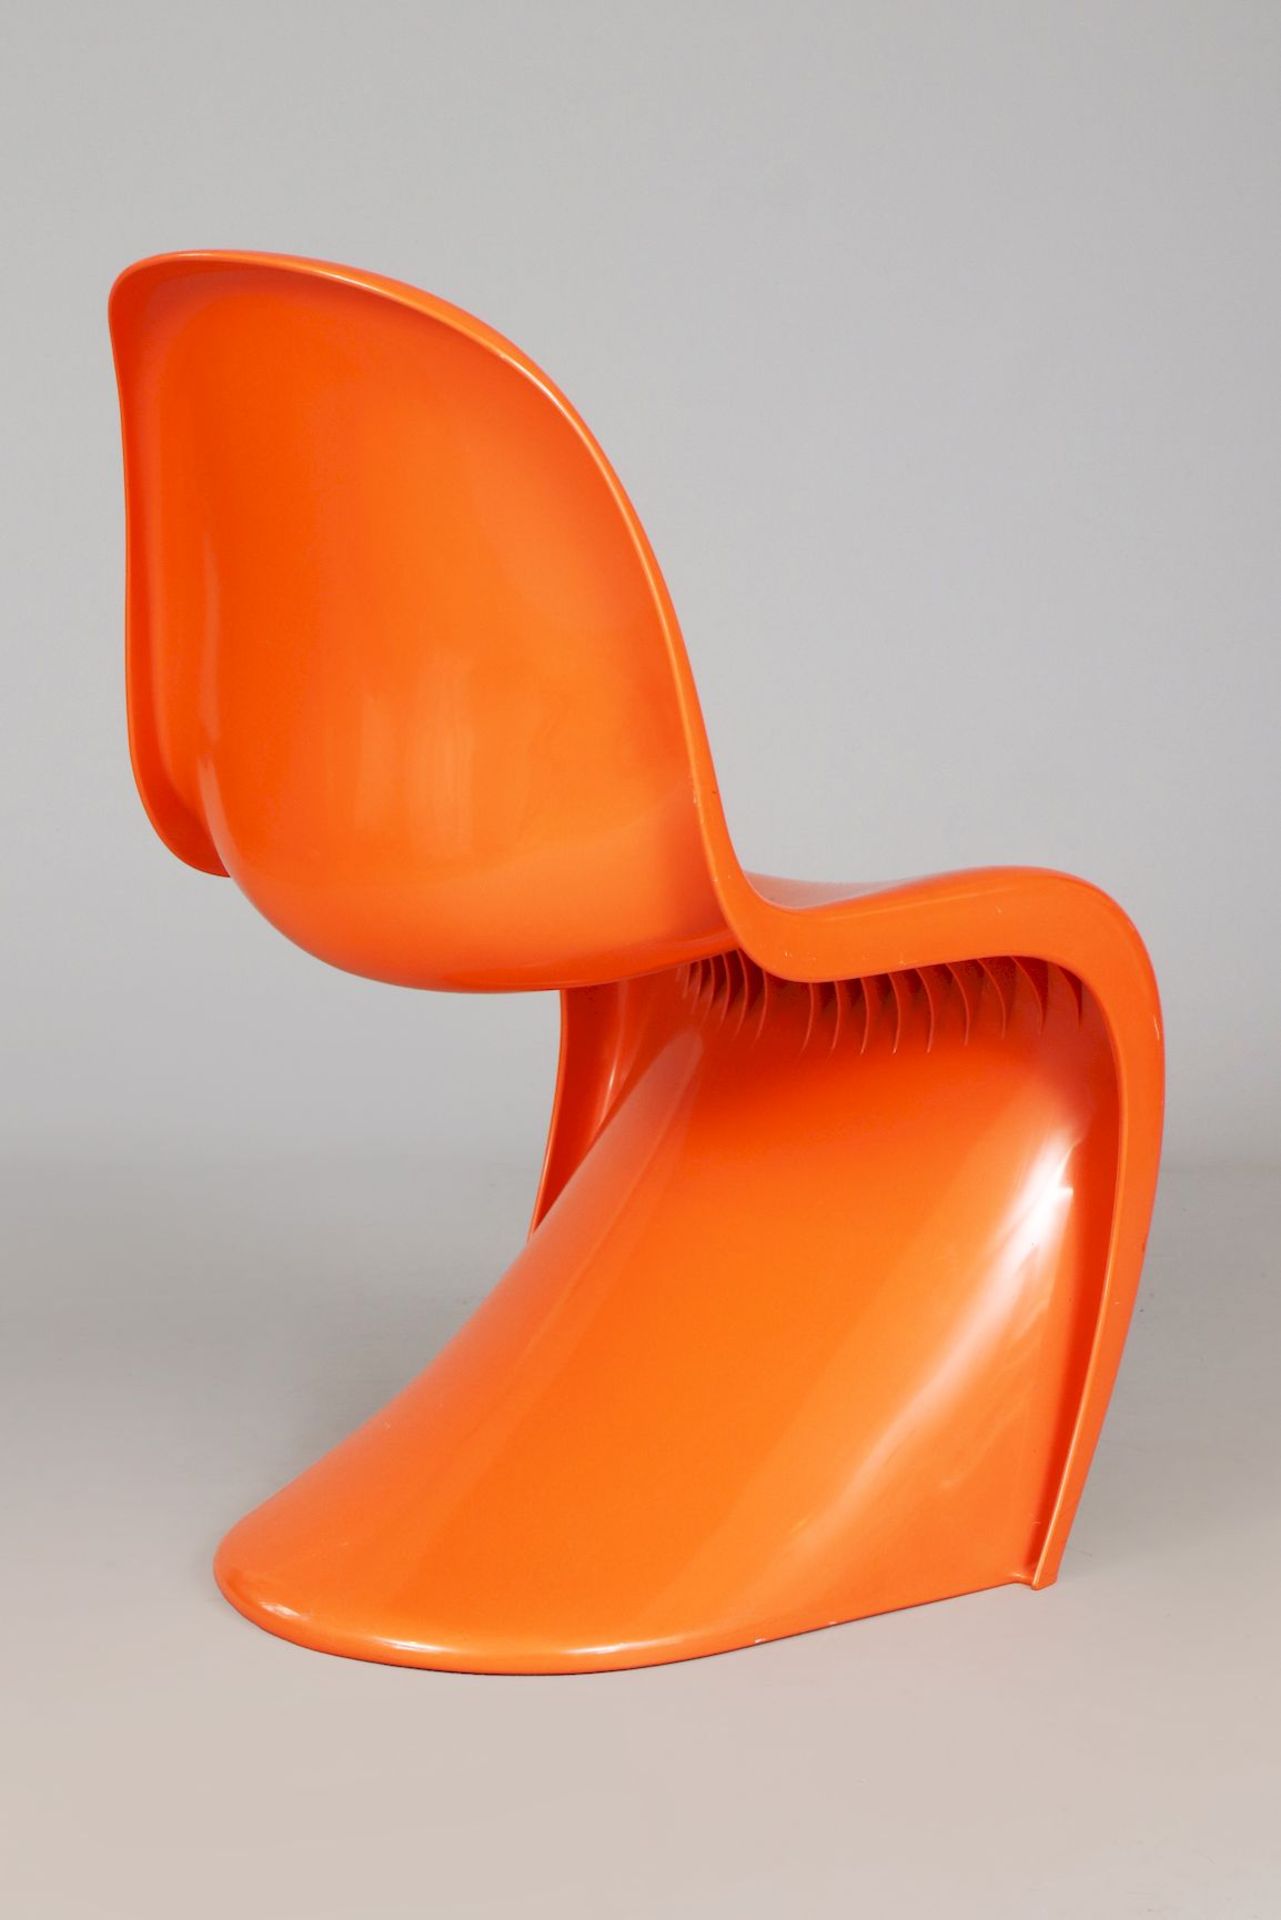 Verner PANTON (1926-1998) ¨Panton Chair¨ - Image 2 of 5